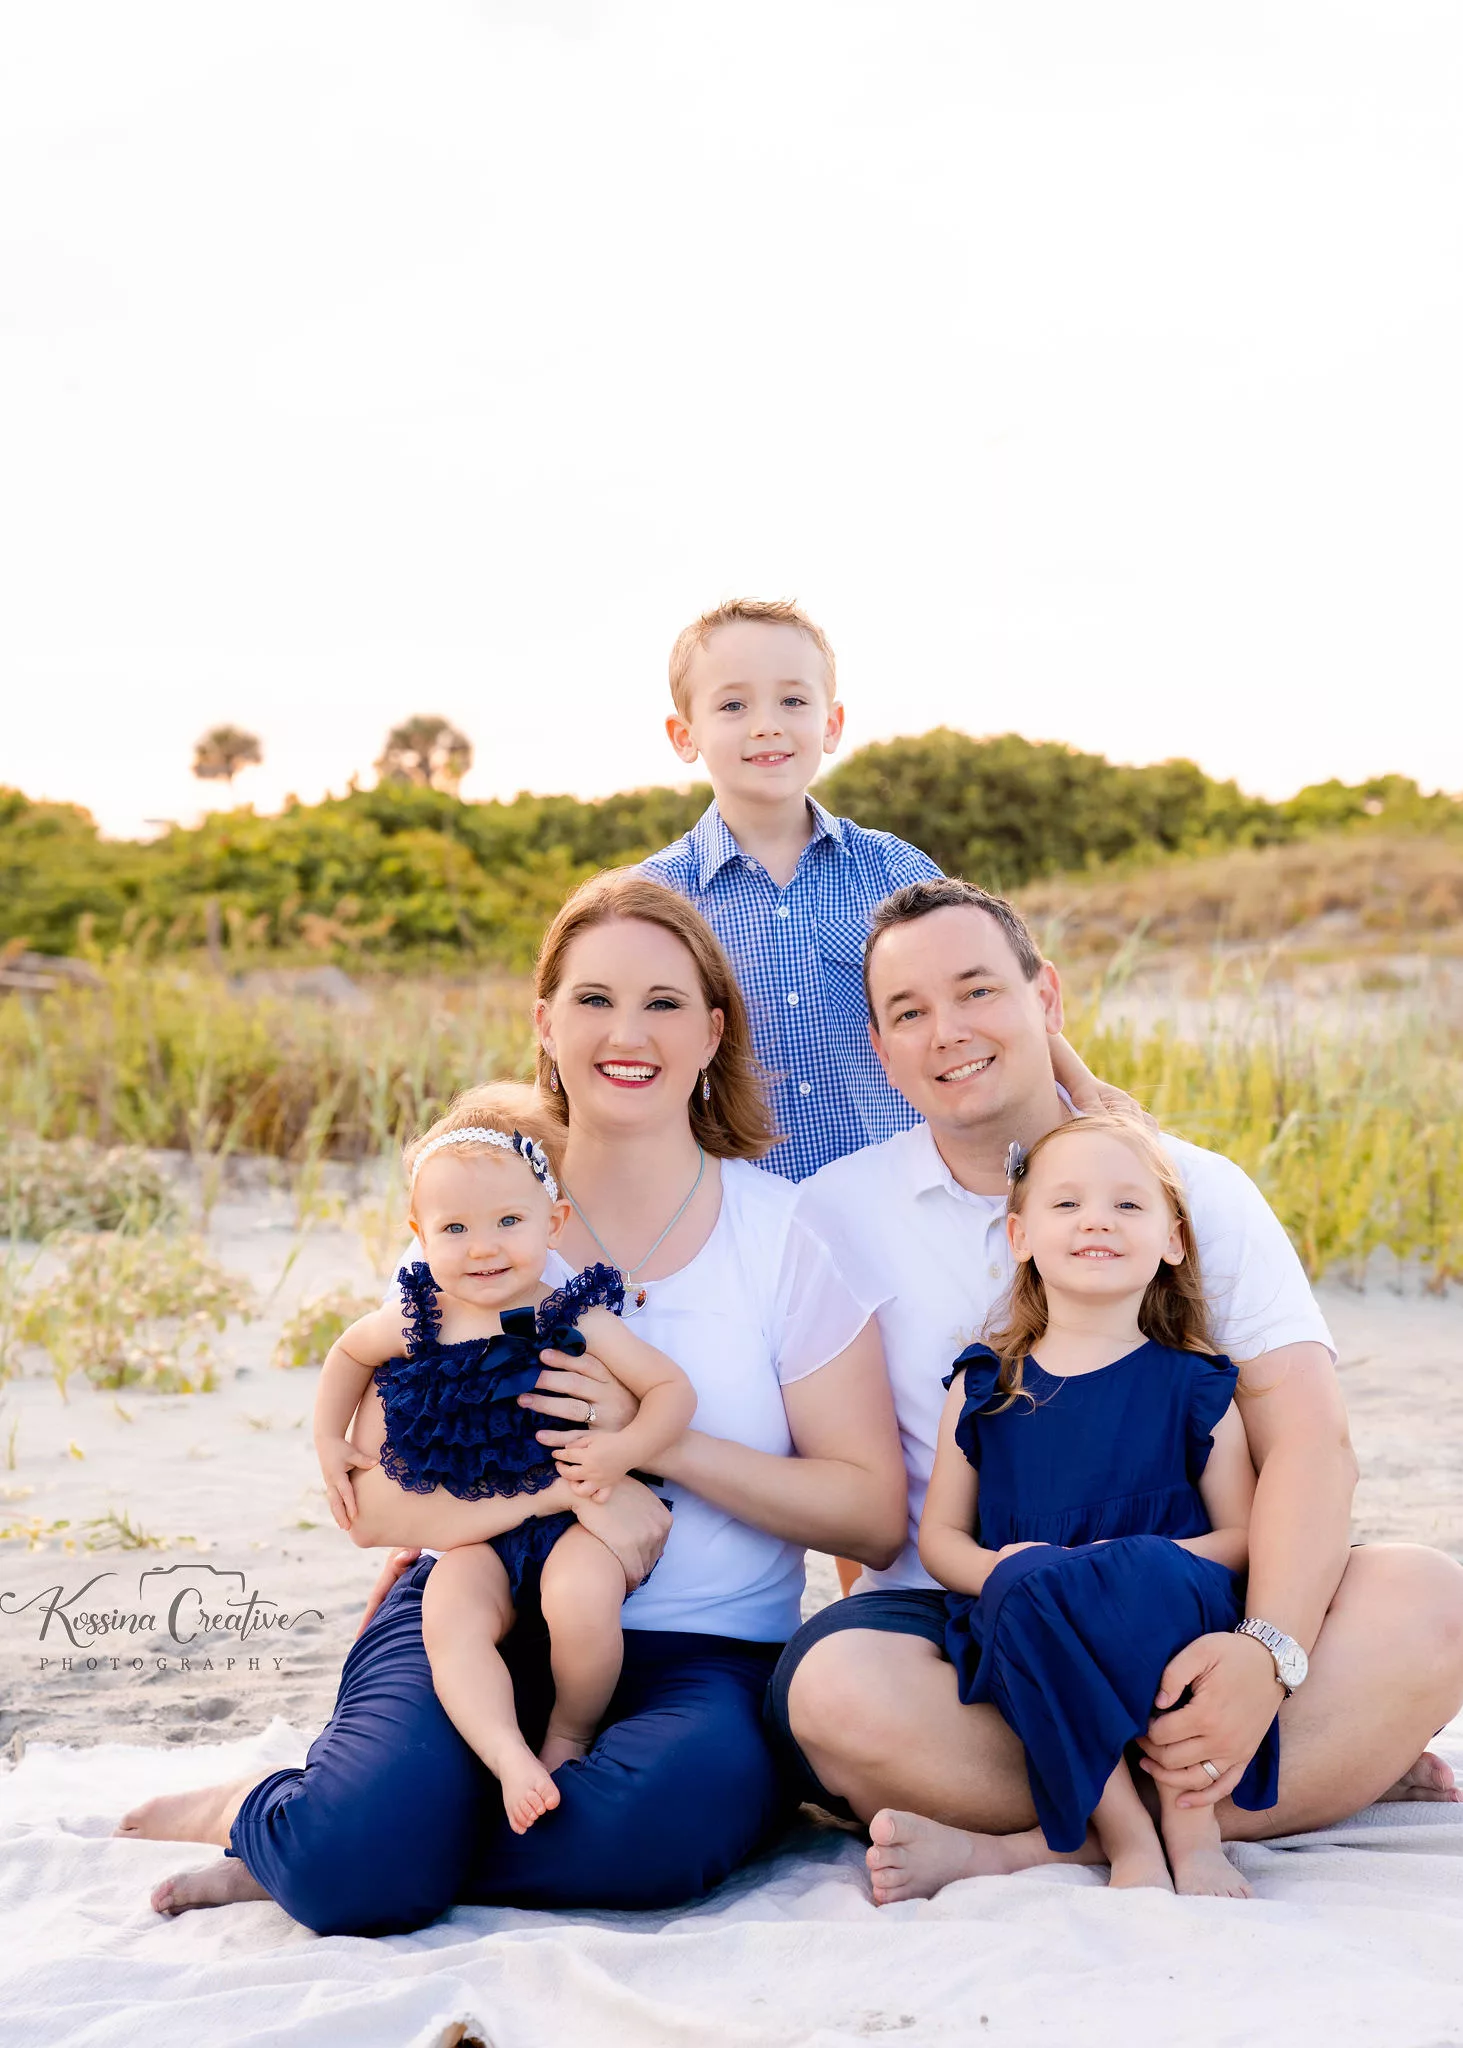 Orlando Family Photographer Family session beach photo cape canaveral